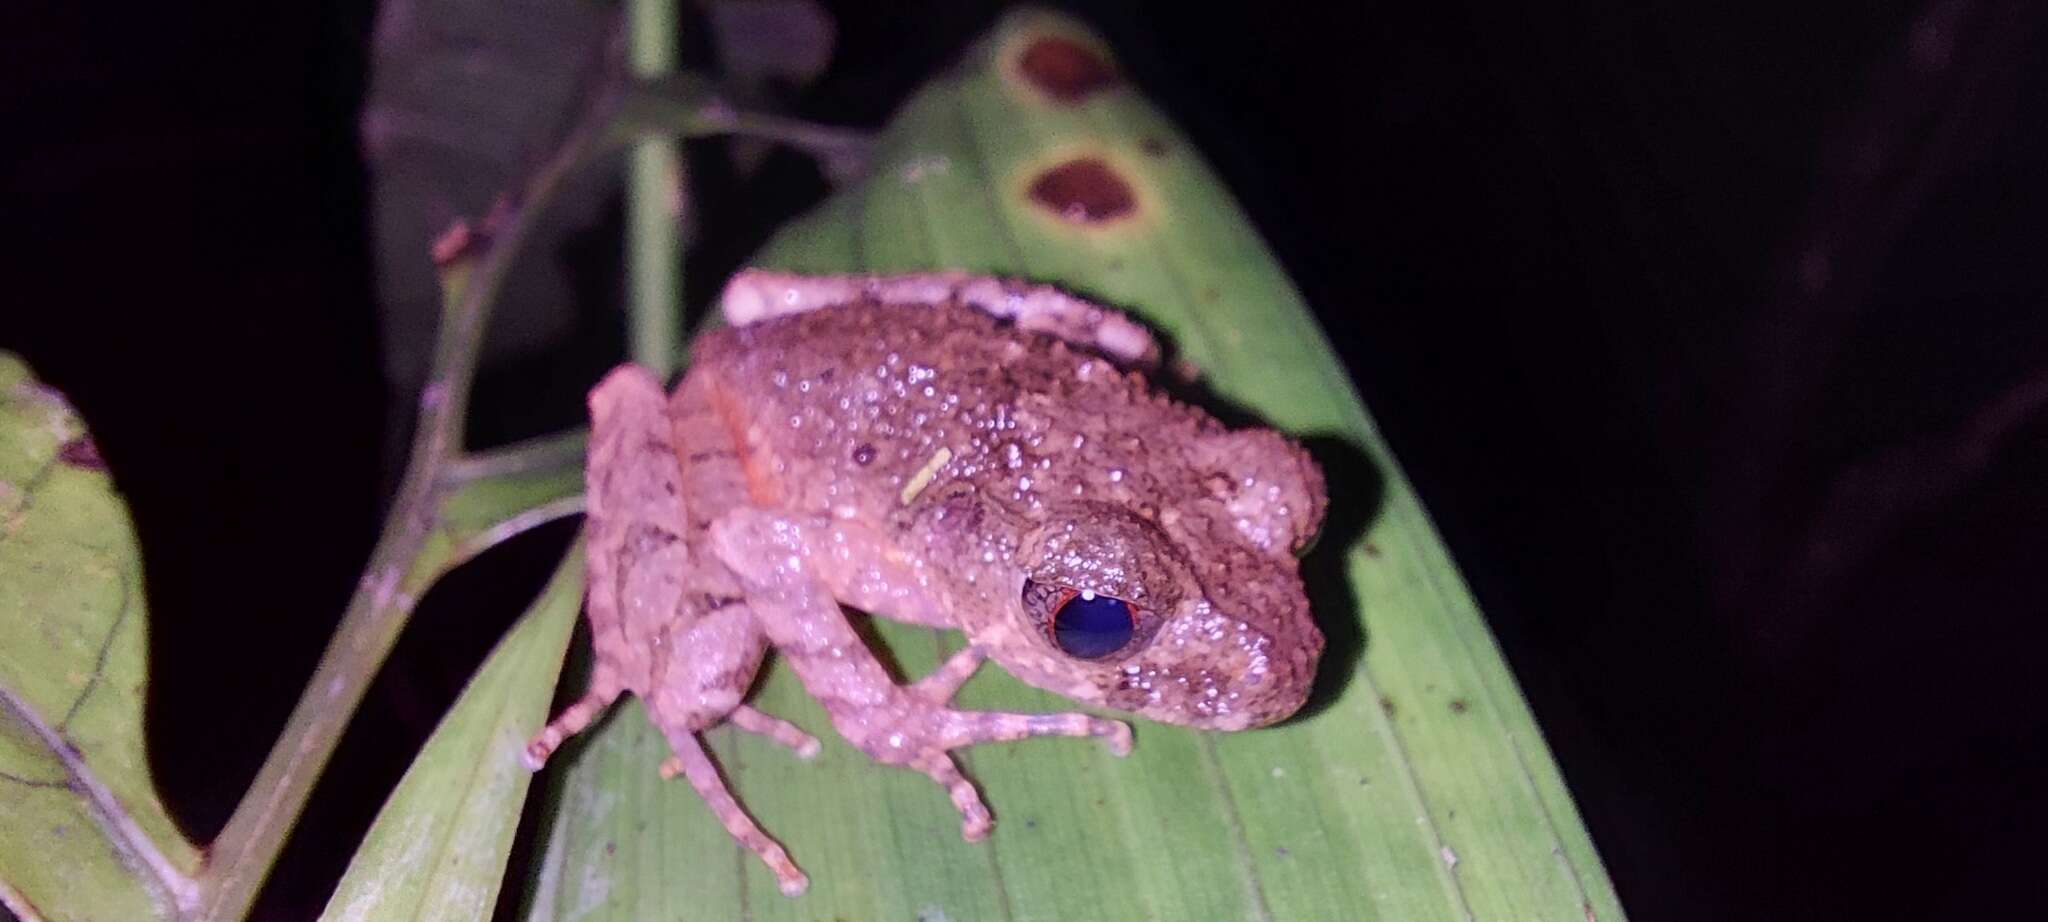 Image of Kinabalu slender litter frog